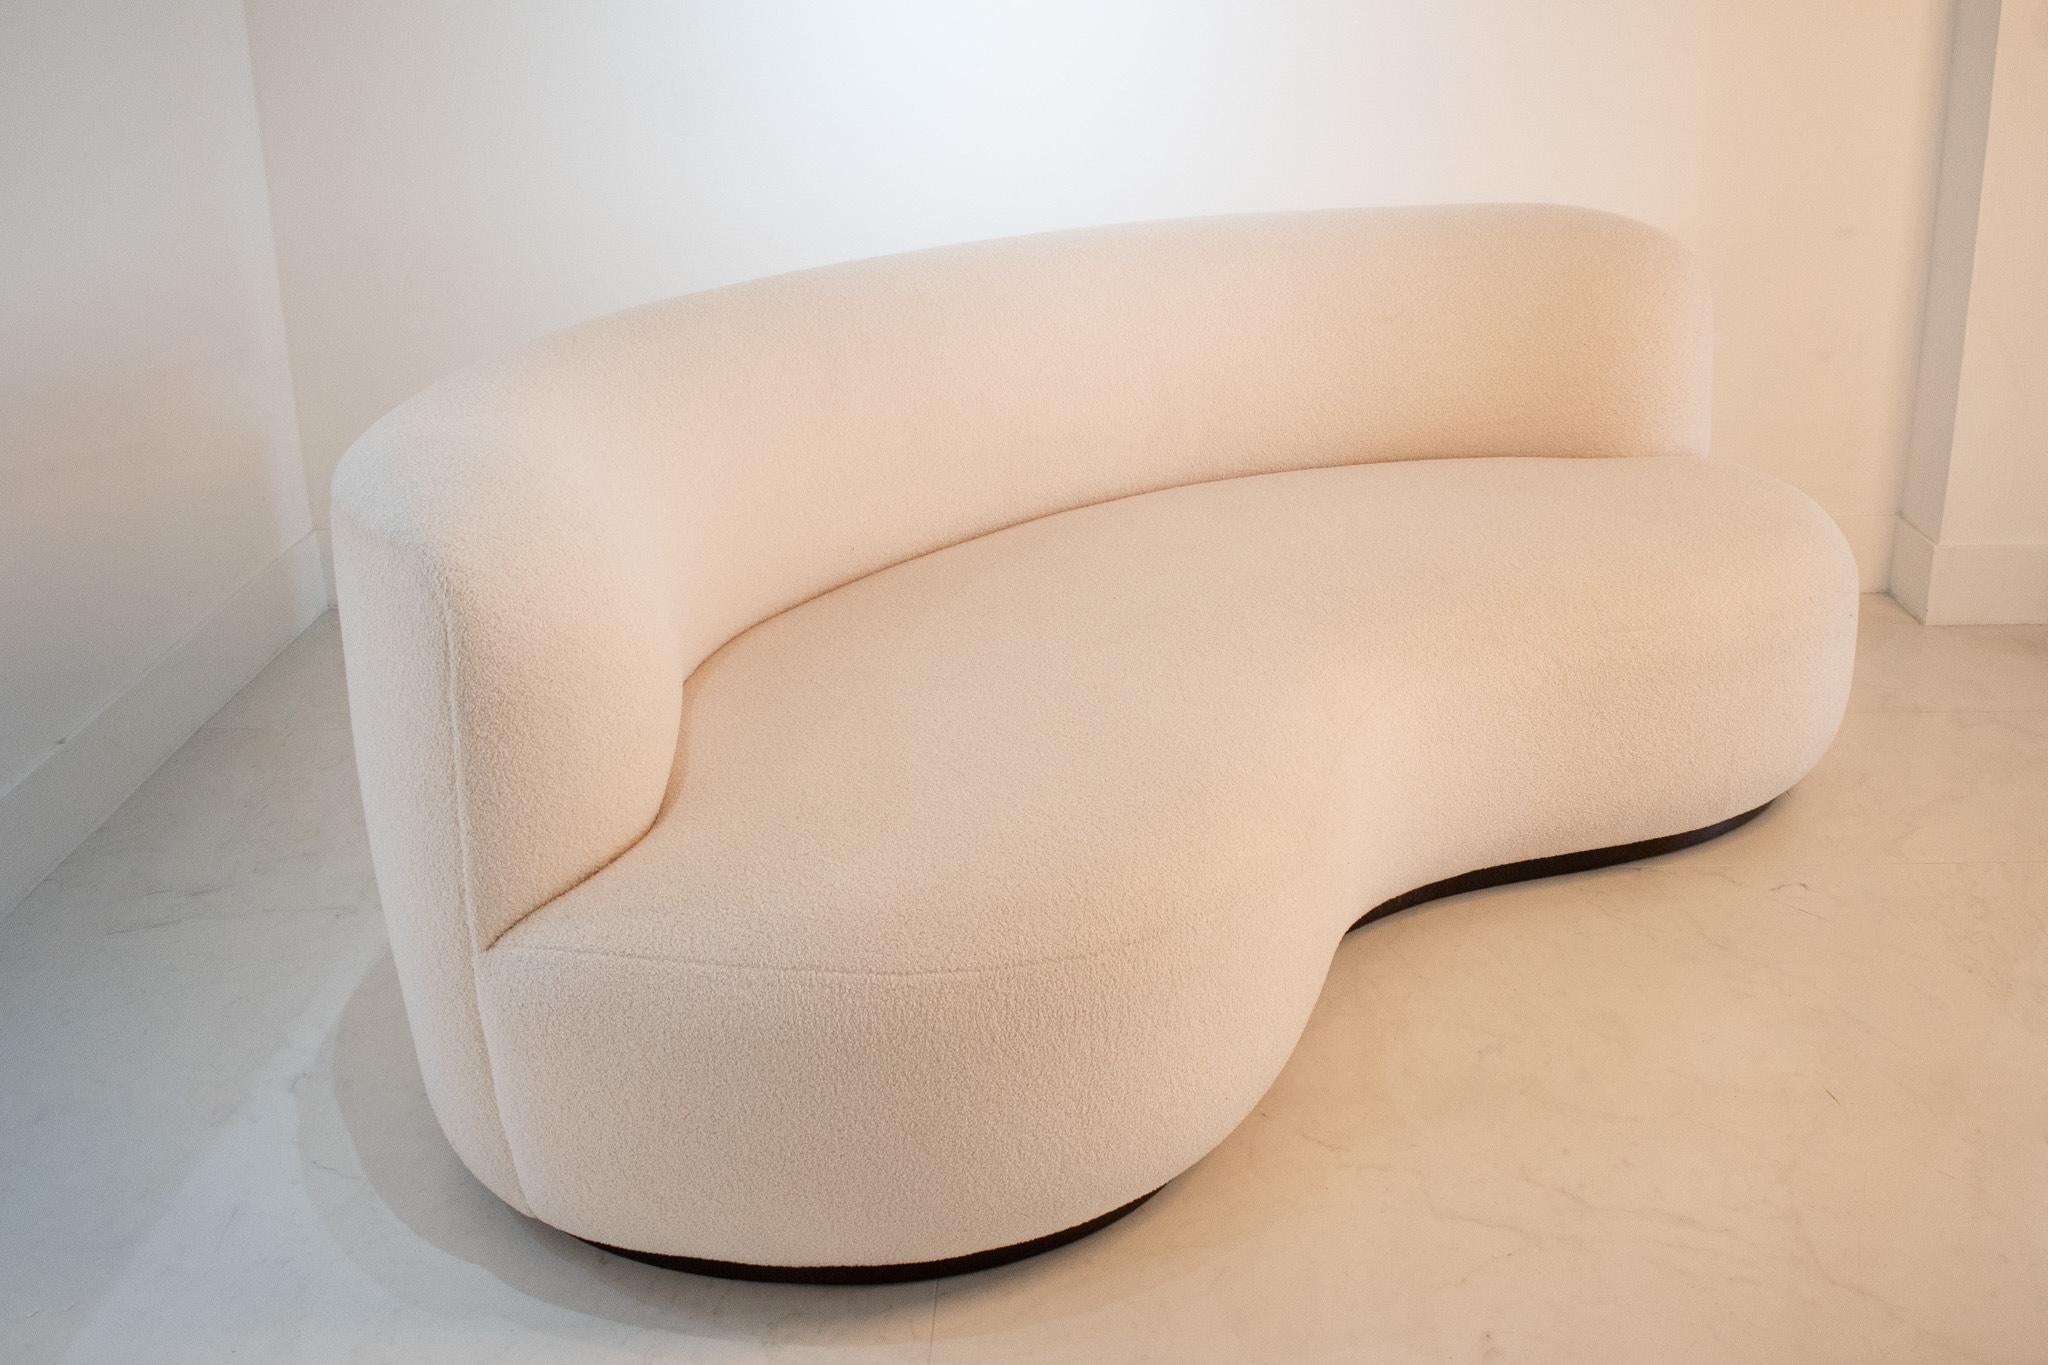 curved white sofa